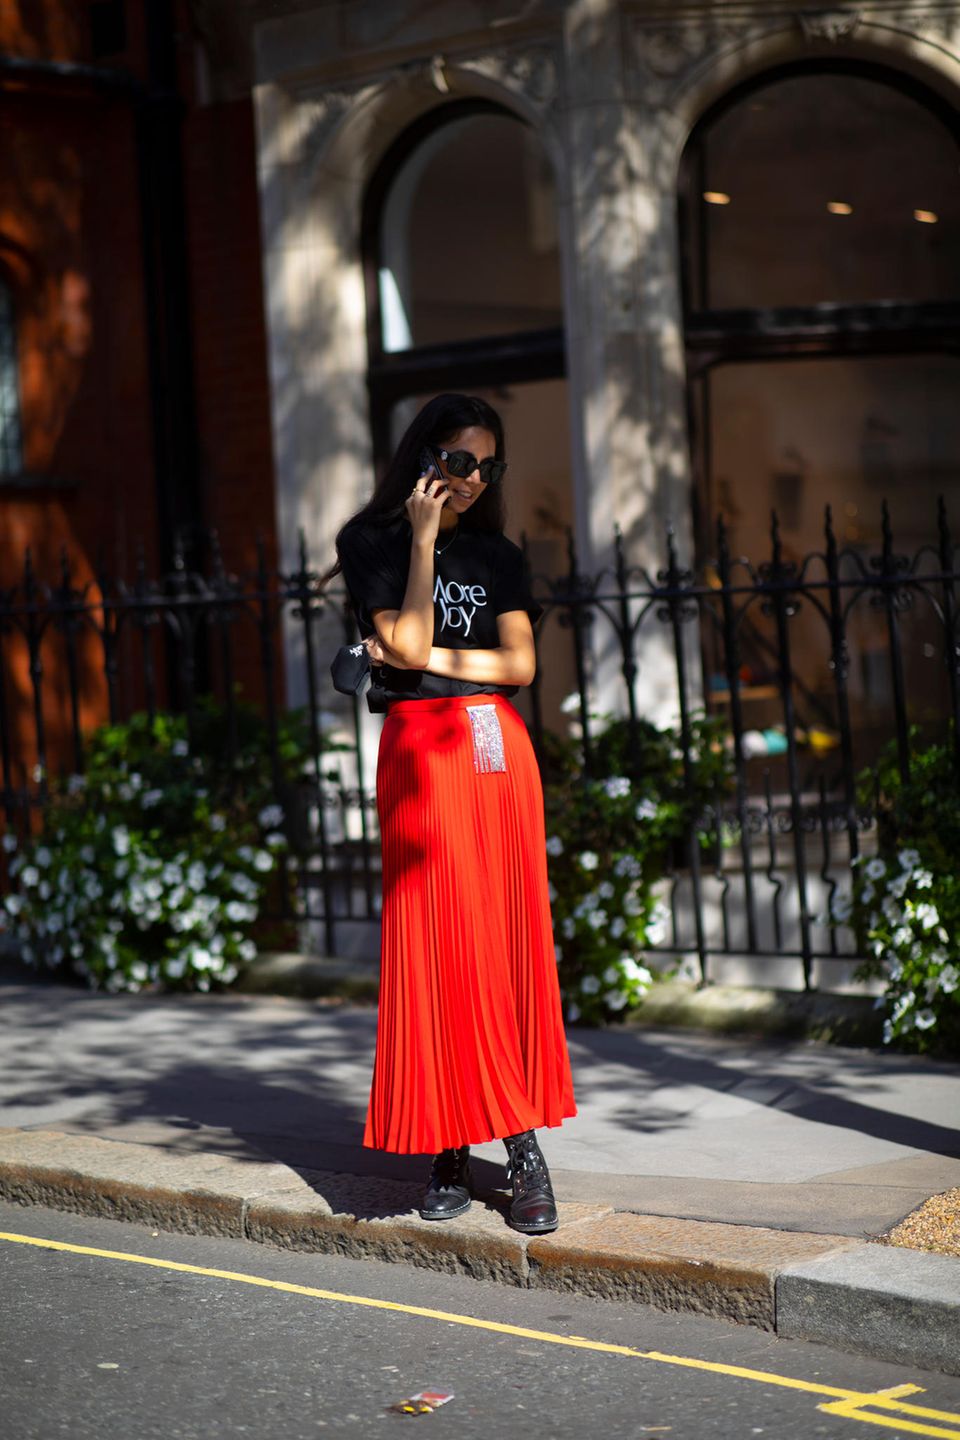 Streetstyle Fashionweek: Roter pliseerock mit schwarzem Shirt